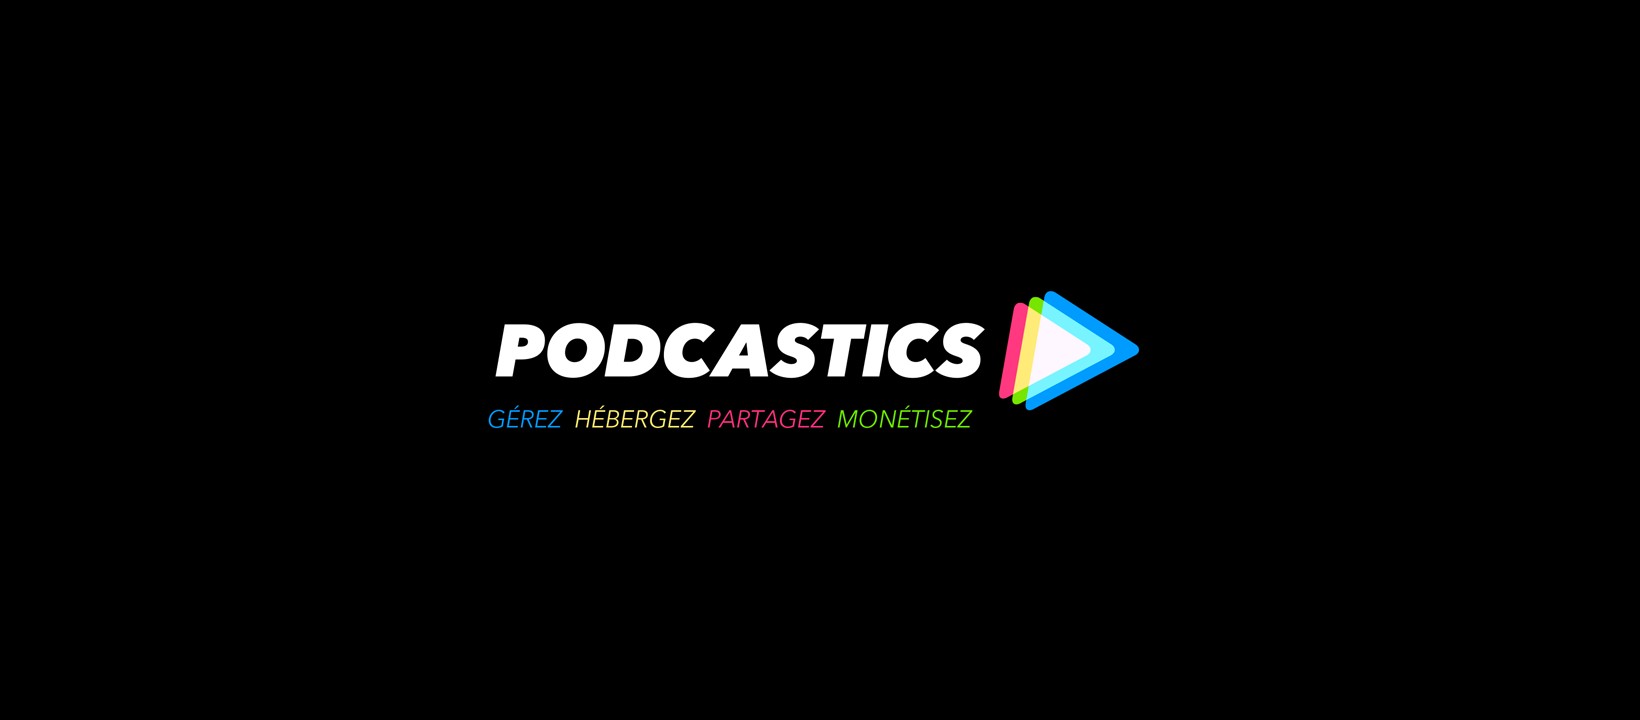 See the Best Podcast Hosting Platforms